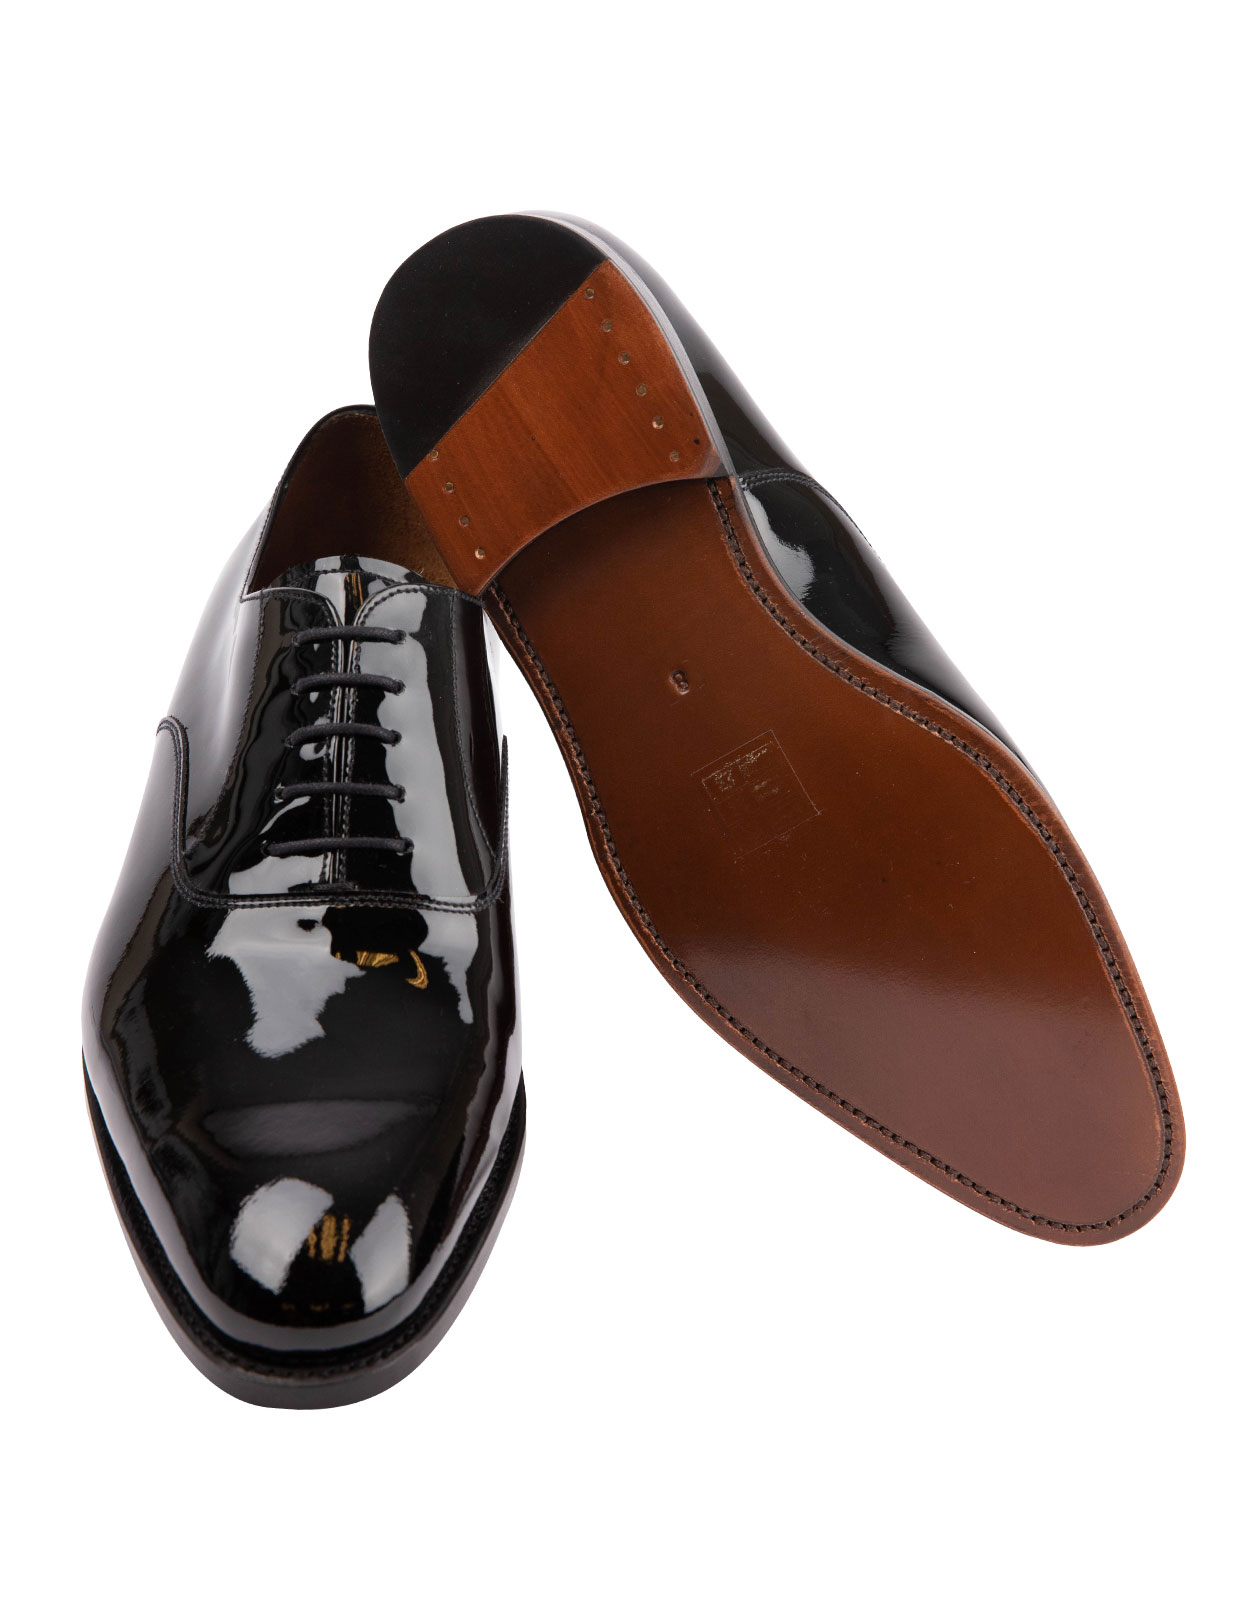 Patent Leather Oxford Shoe Black Stl 11